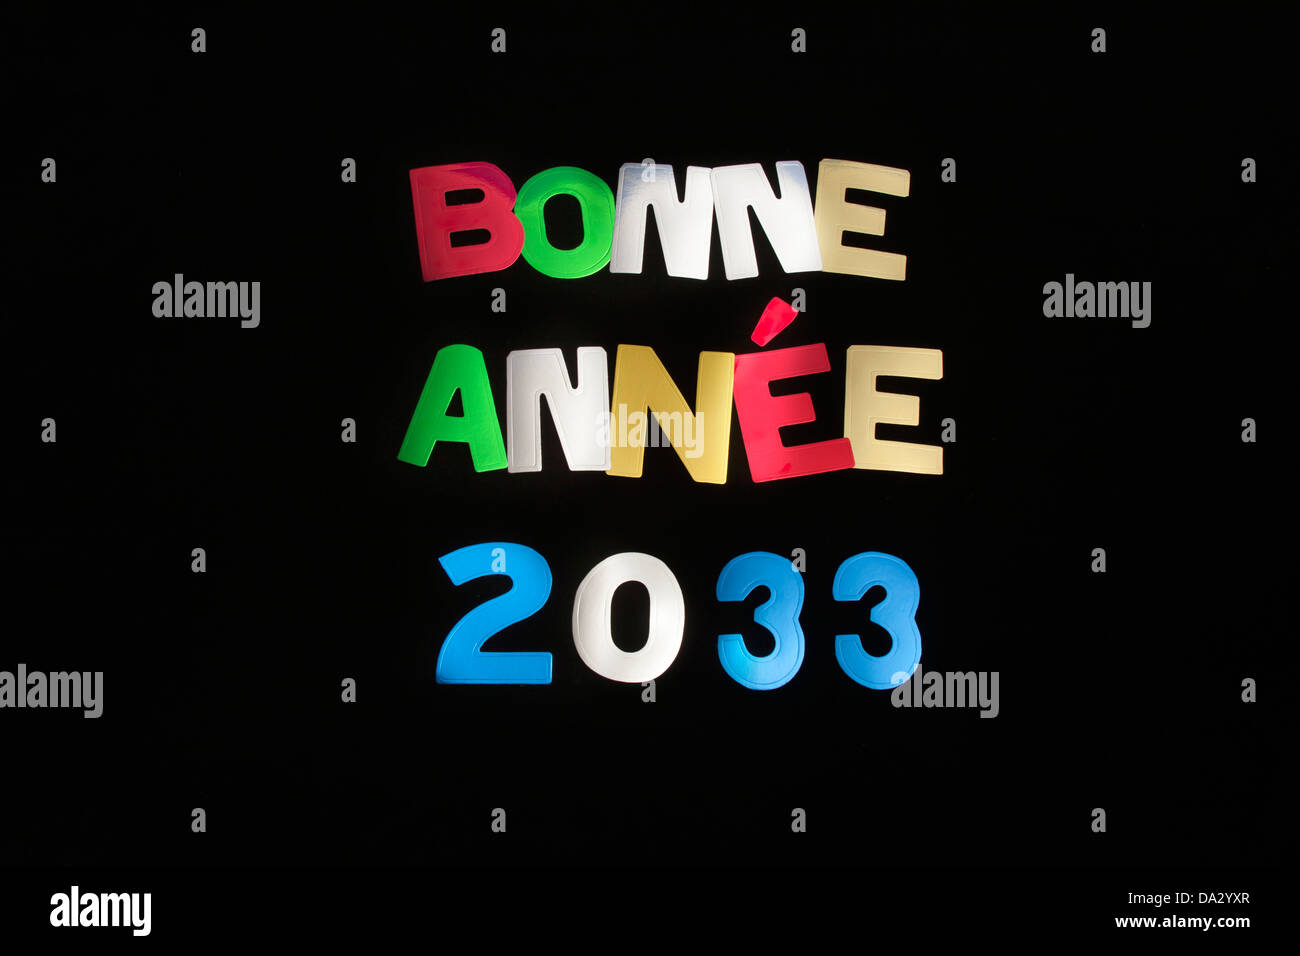 BONNE ANNEE 2033 Stock Photo